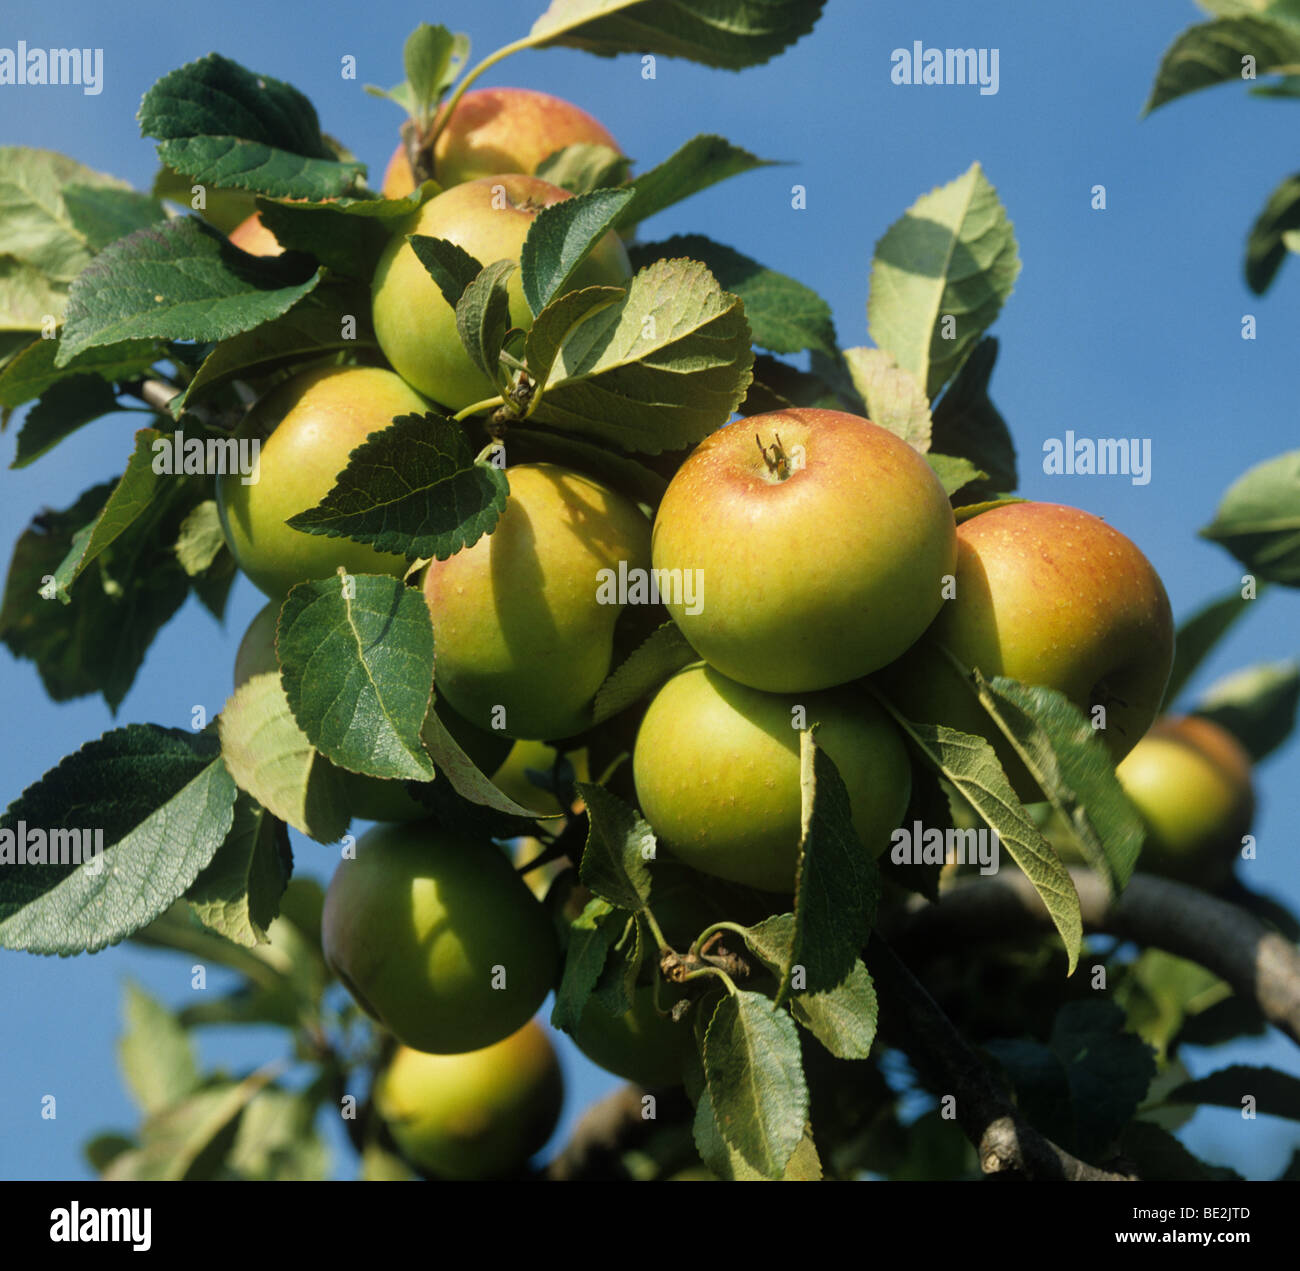 Mature Coxs orange pippin apple fruit on the tree Stock Photo